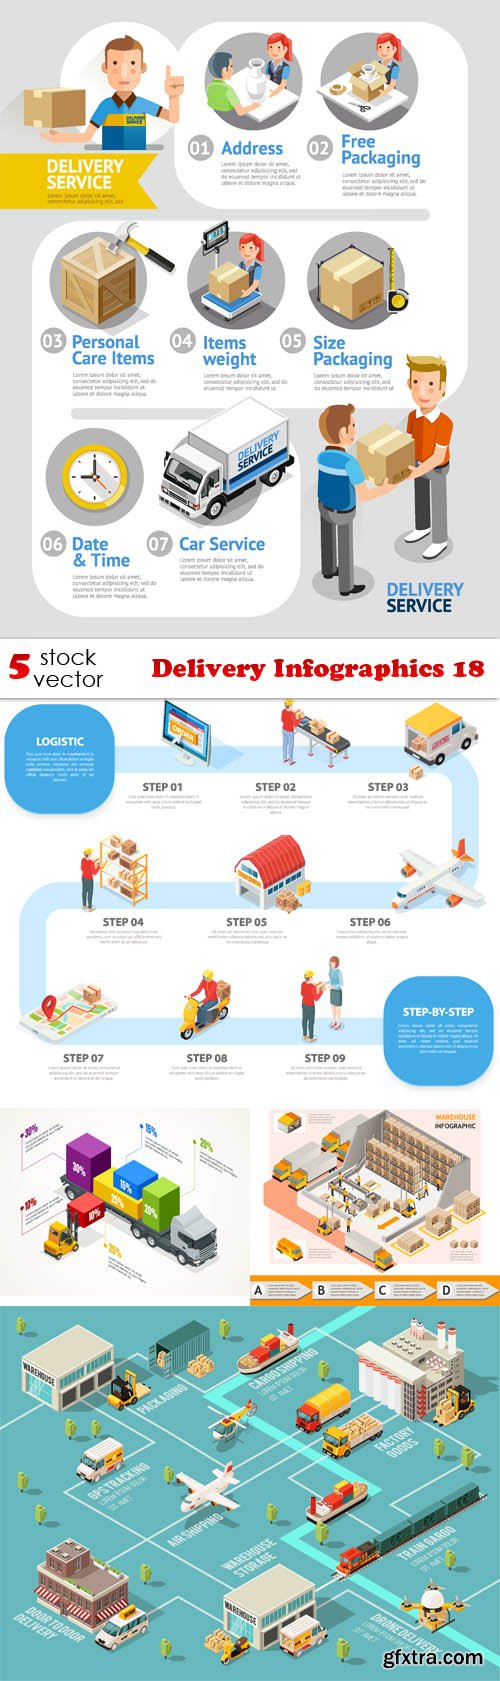 Vectors - Delivery Infographics 18